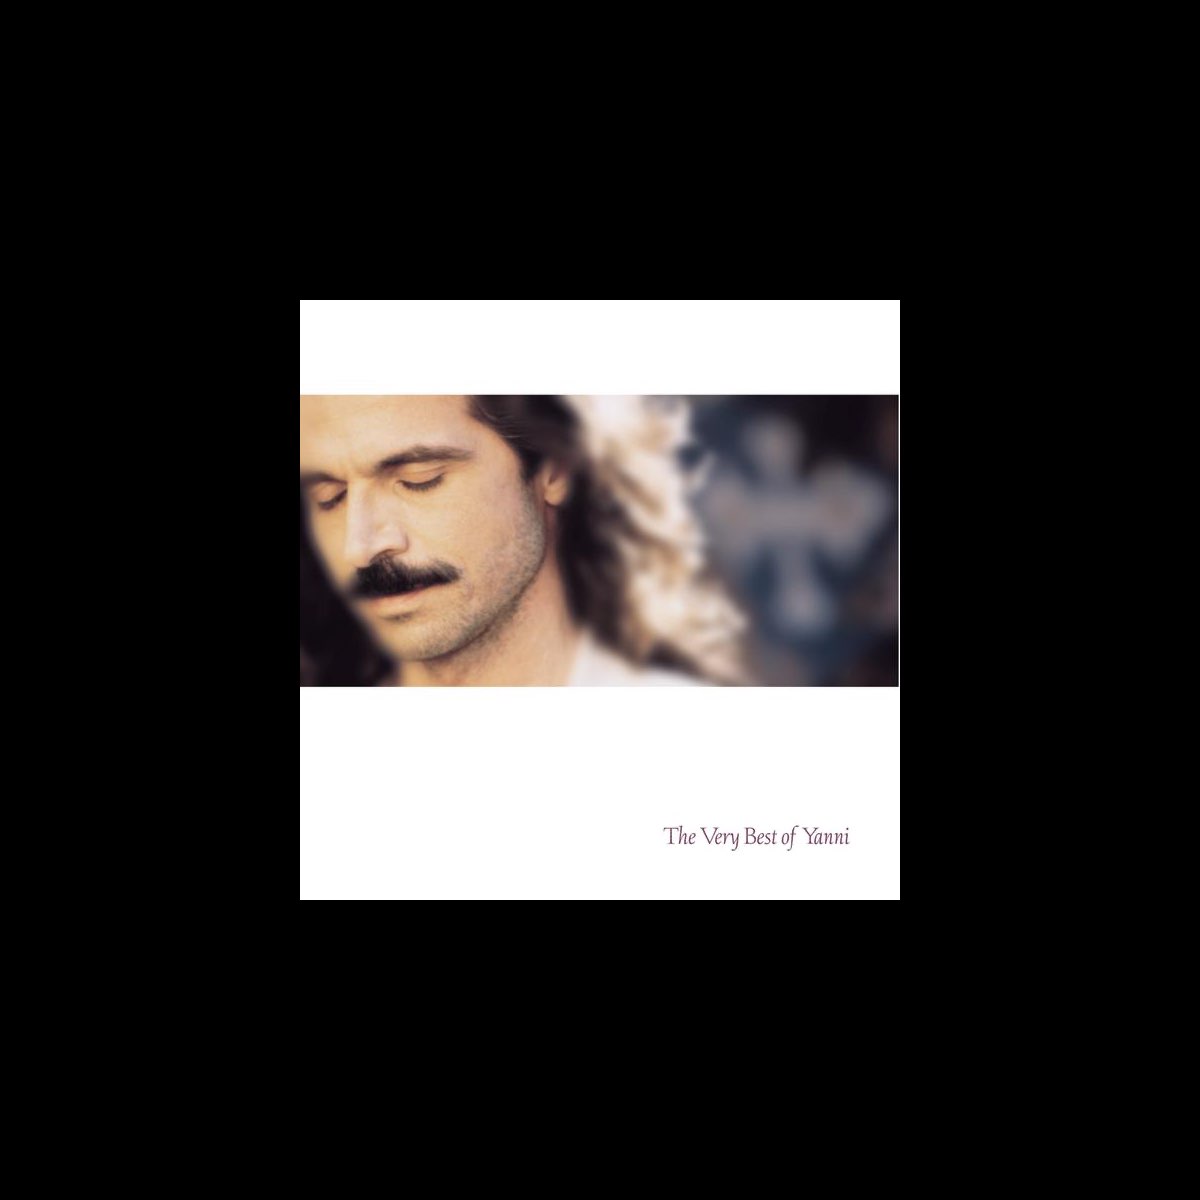 ‎The Very Best of Yanni - Album by Yanni - Apple Music